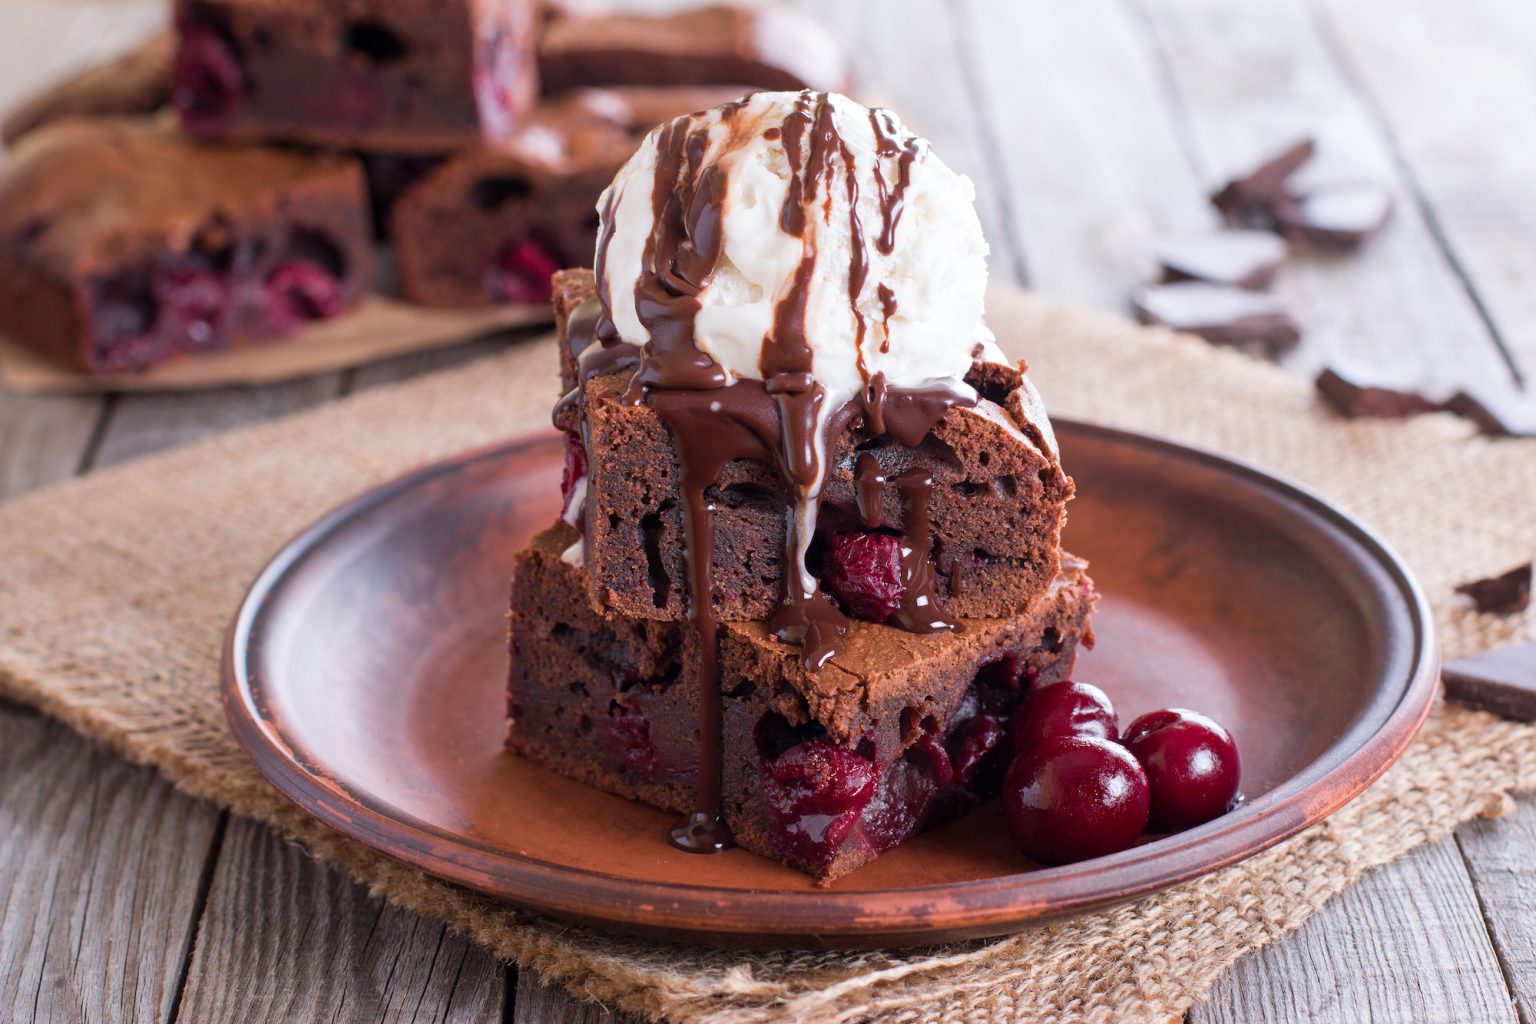 Chocolate Brownie With Cherry And Ice Cream 1536x1024 